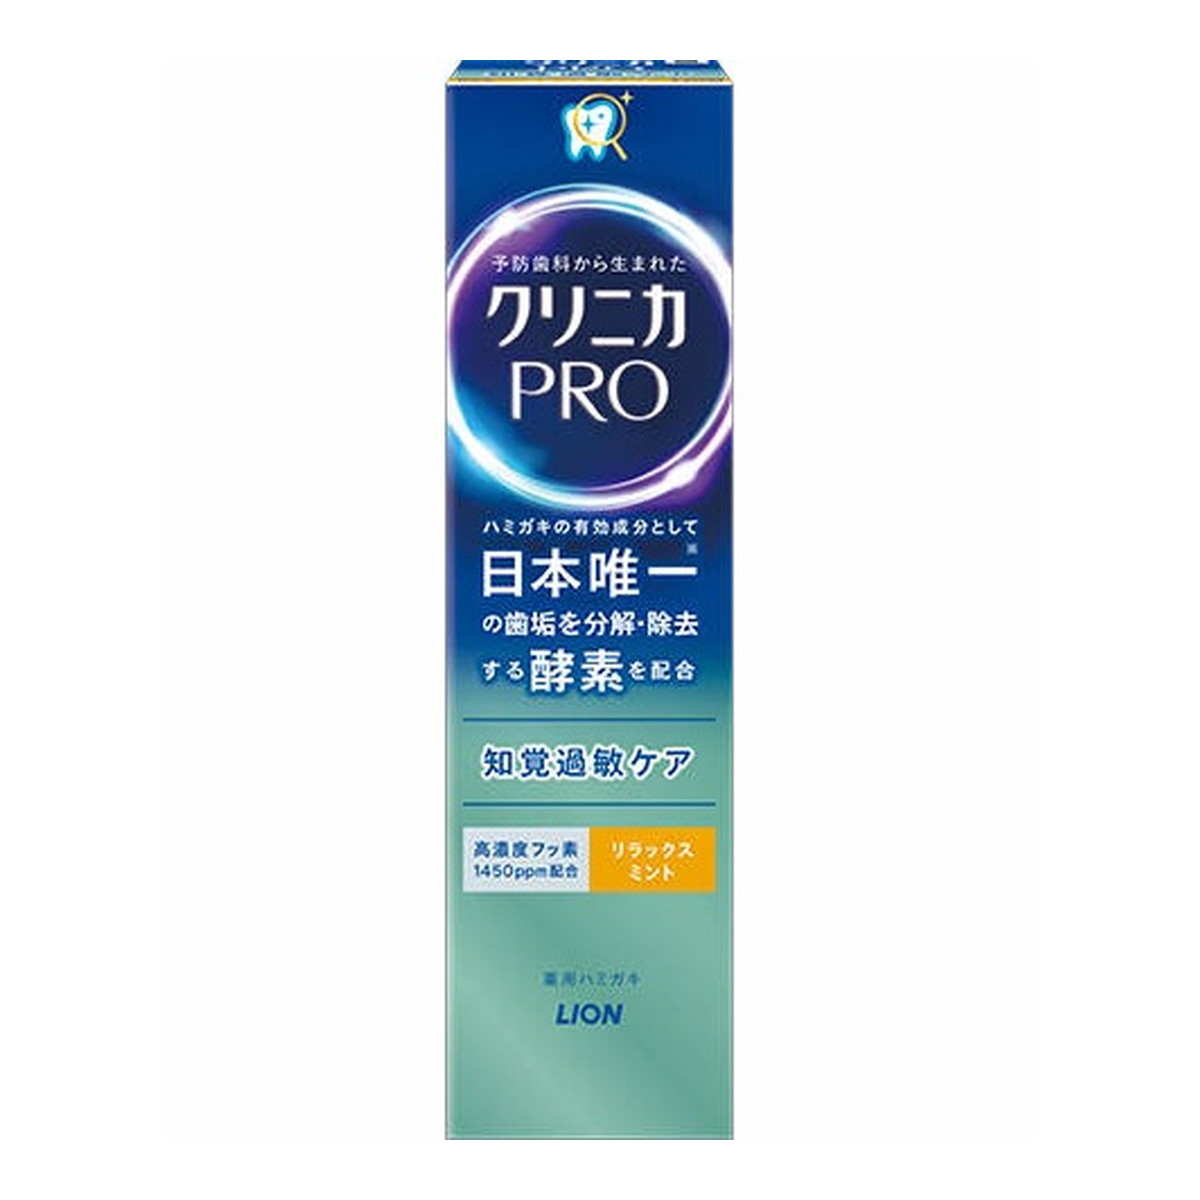 LION クリニカ PRO 知覚過敏ケア リラックスミント 95g×4本 クリニカ 歯磨き粉の商品画像